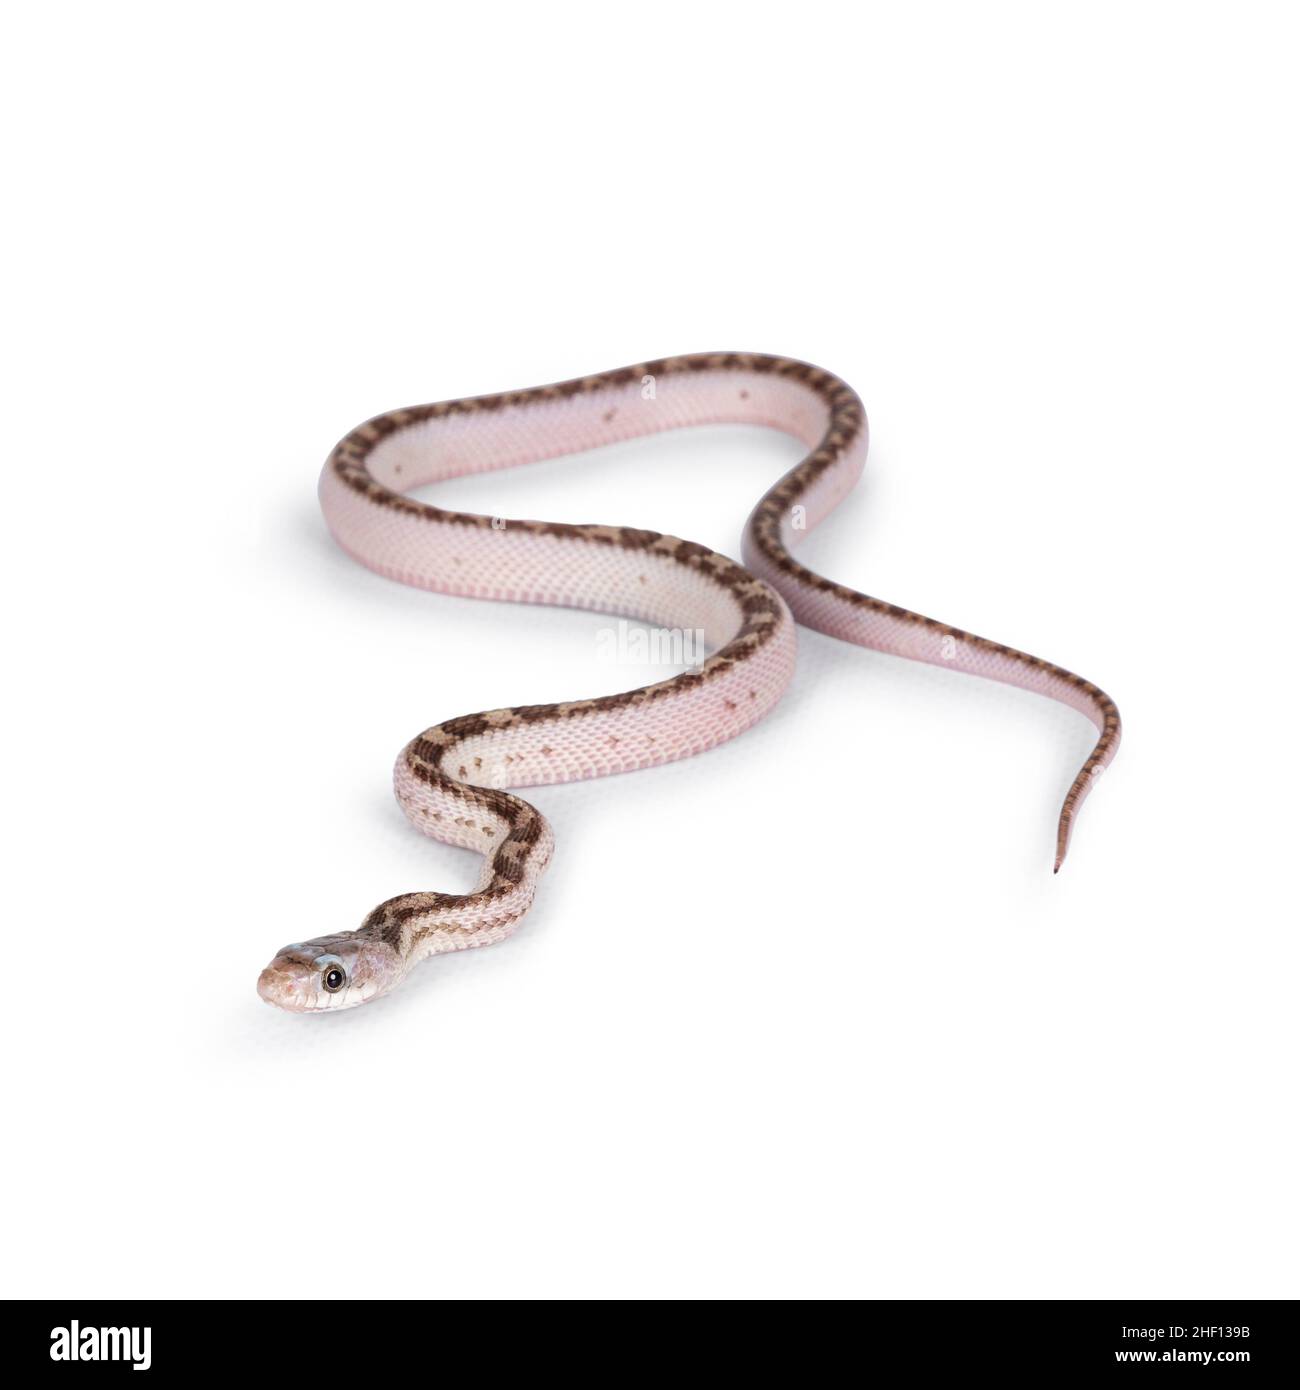 Baby white sided Texas rat snake or Elaphe obsoleta lindheimeri  crawling over white solid background. Stock Photo